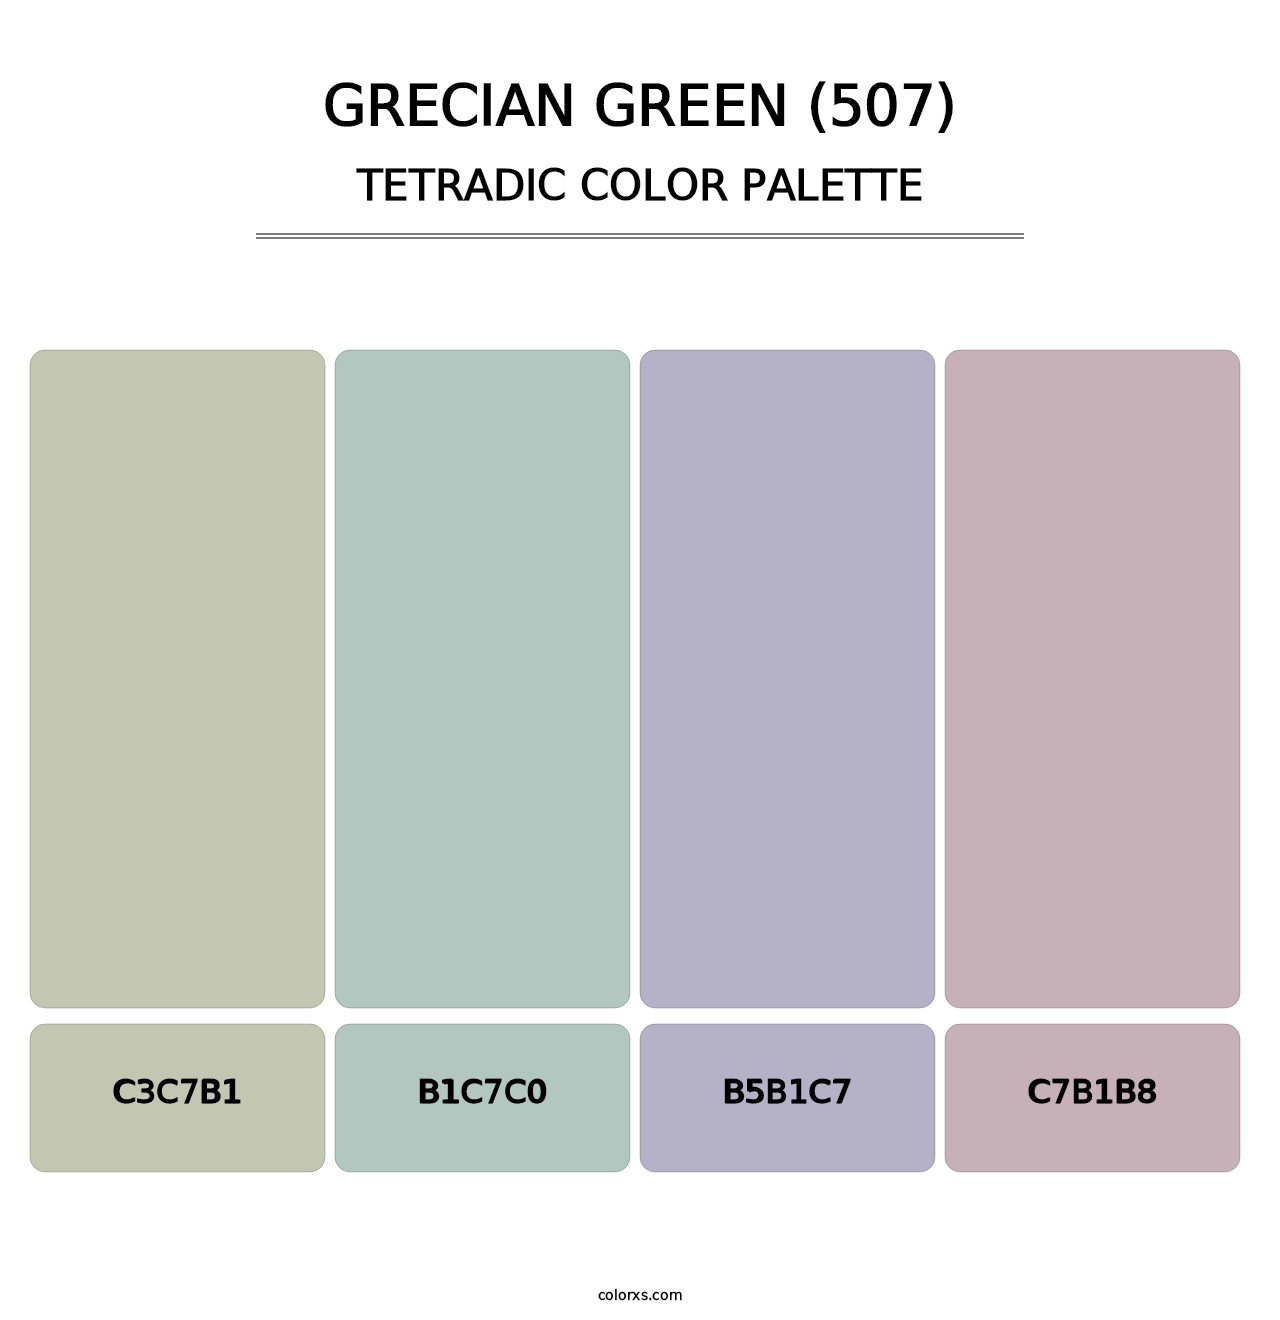 Grecian Green (507) - Tetradic Color Palette